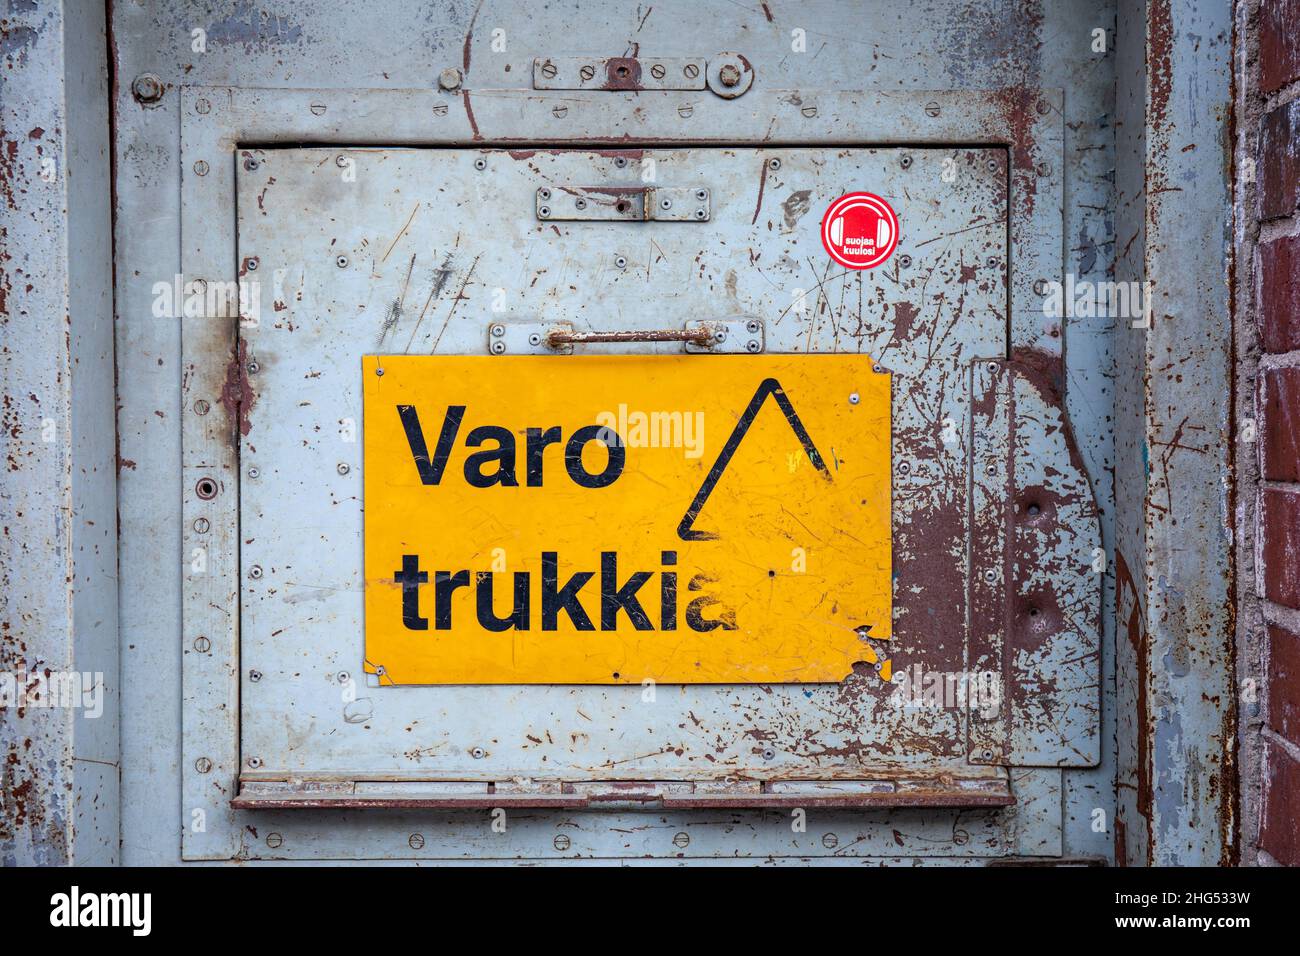 Varo trukkia. Yellow warning sign on an old metal door. Stock Photo